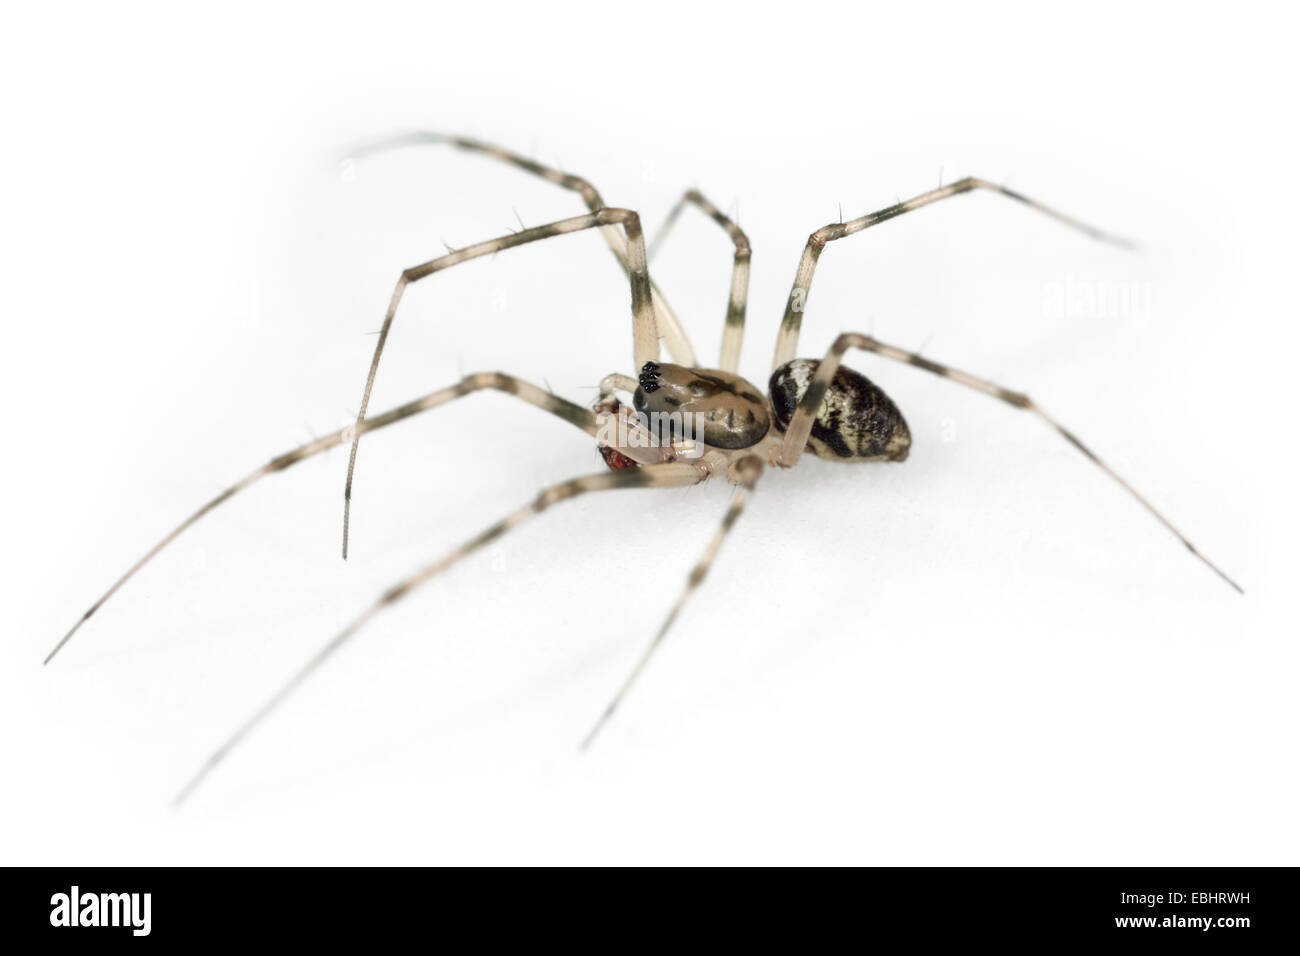 Un hombre araña Invisible (Drapetisca socialis) sobre un fondo blanco. Parte de la familia Linyphiidae - Sheetweb tejedores. Foto de stock